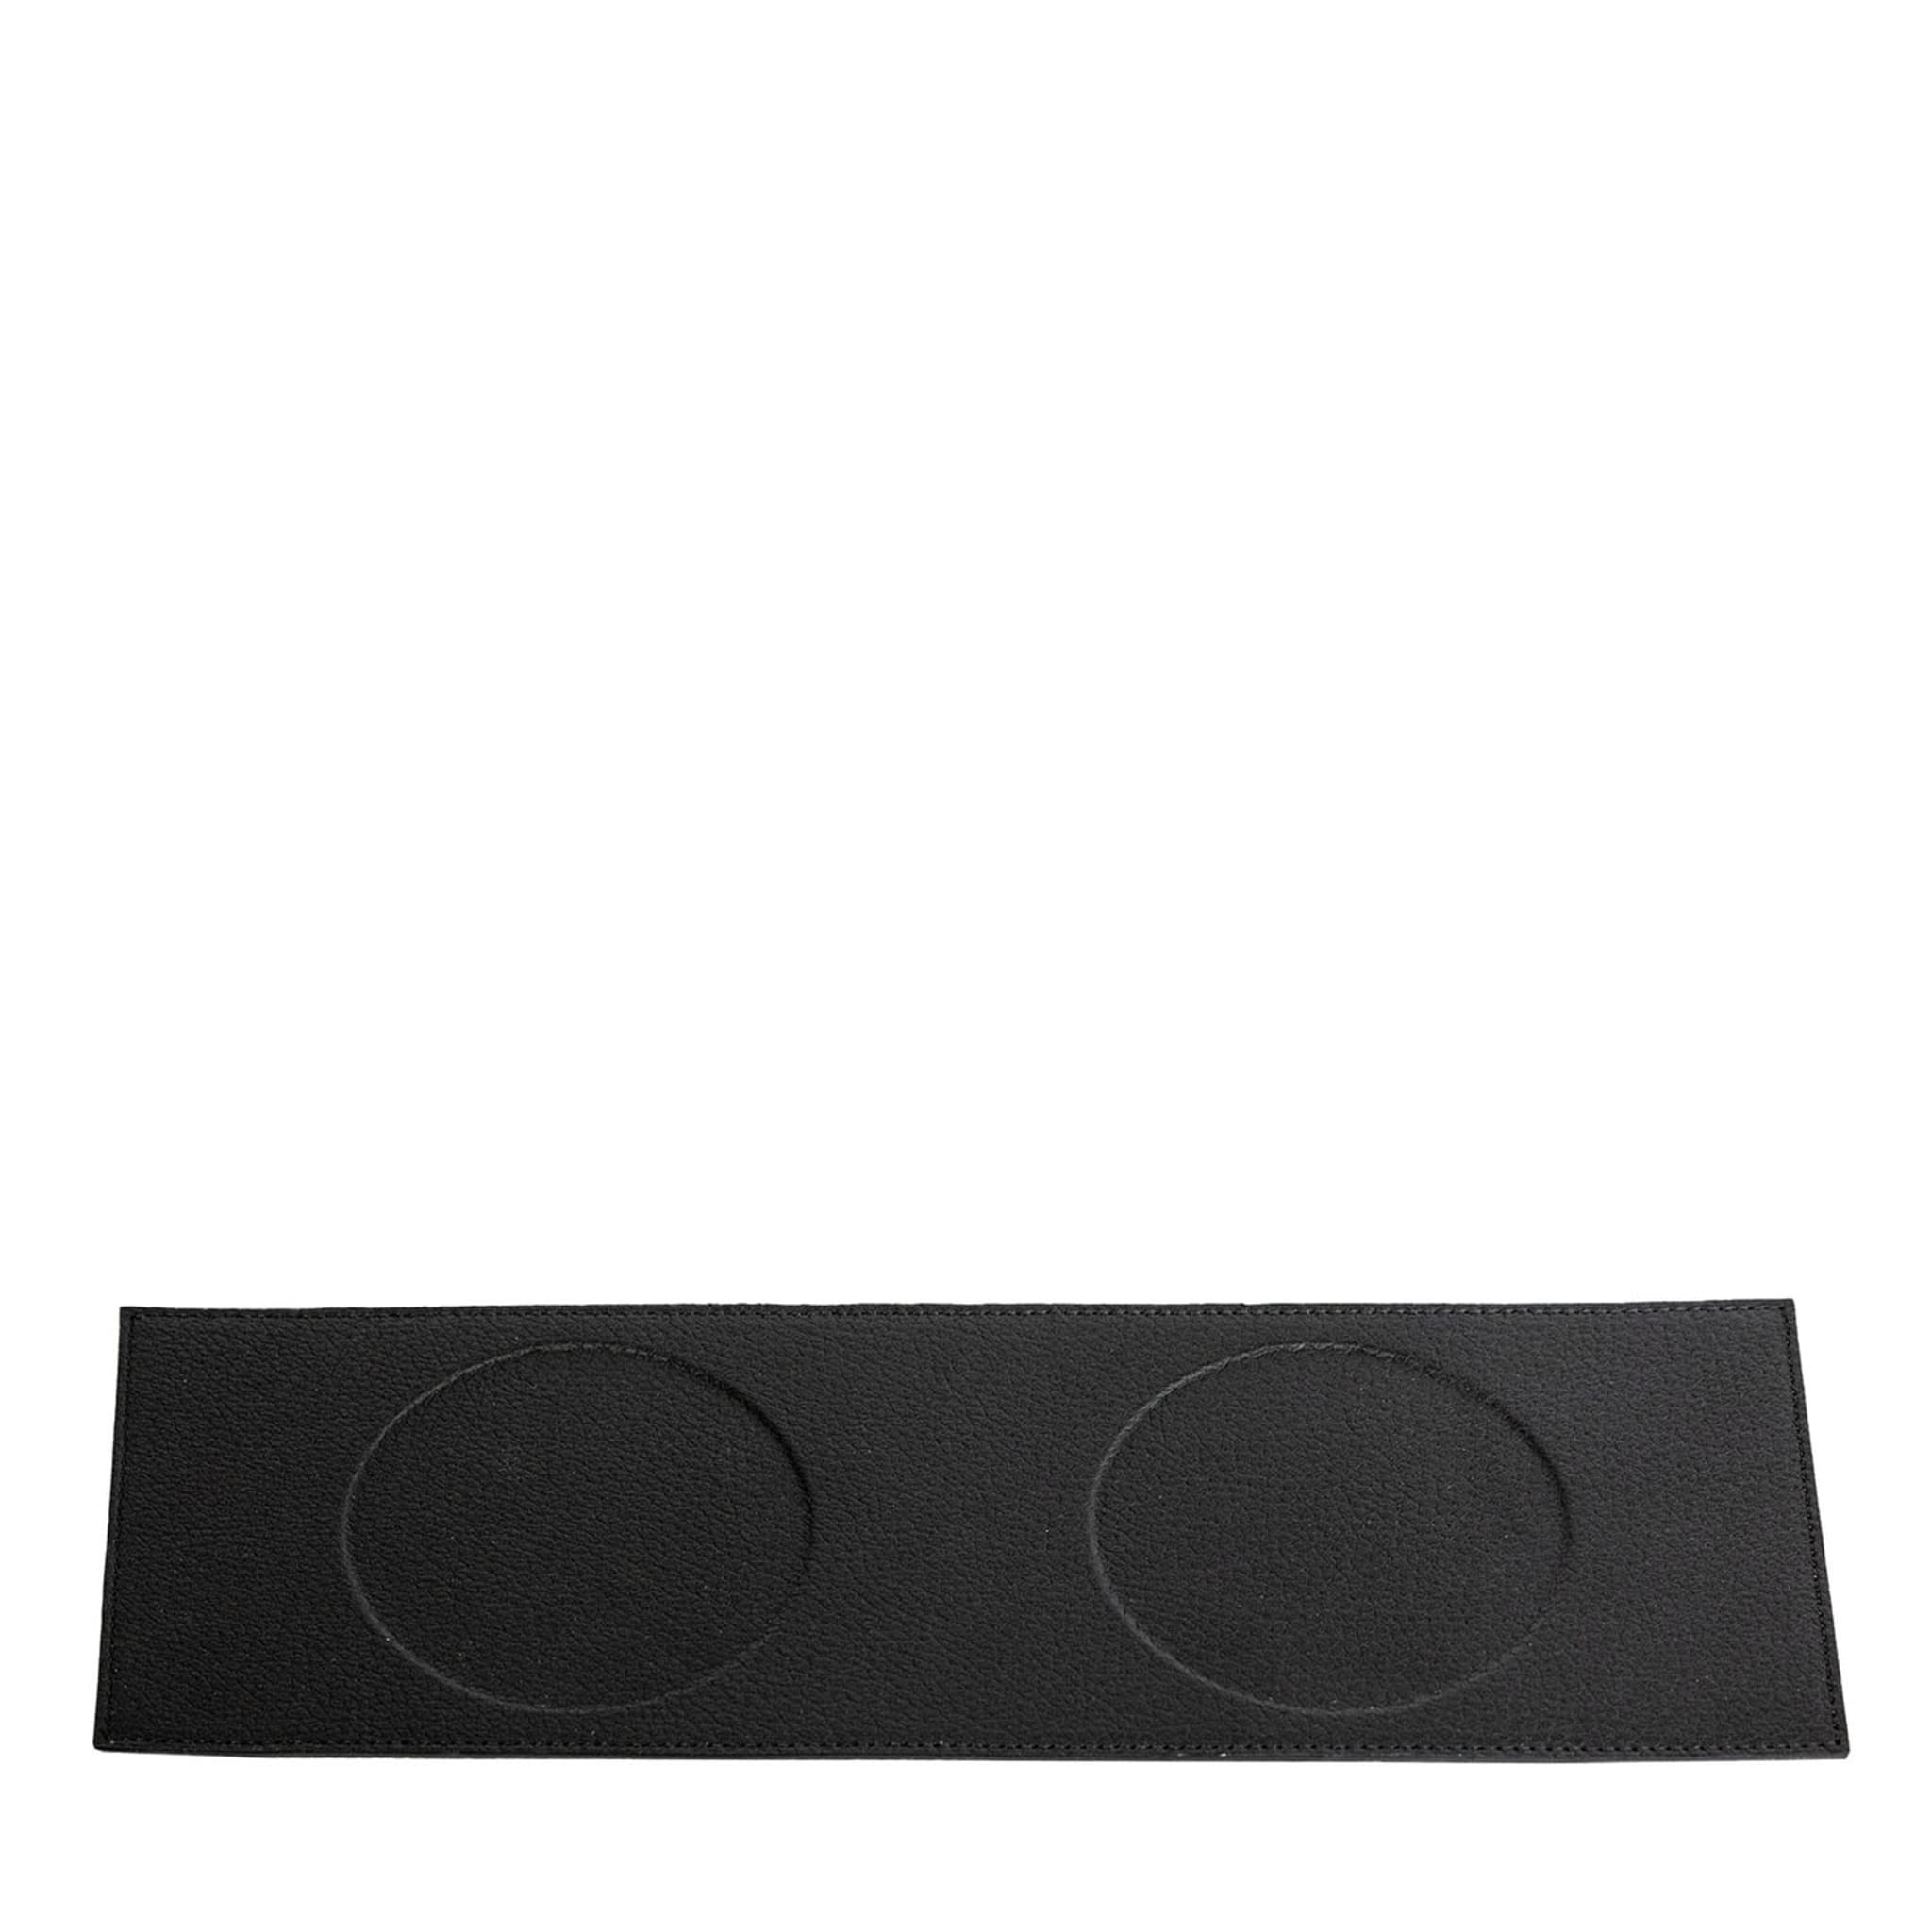 Black Notte Leather Soft Centerpiece - Main view